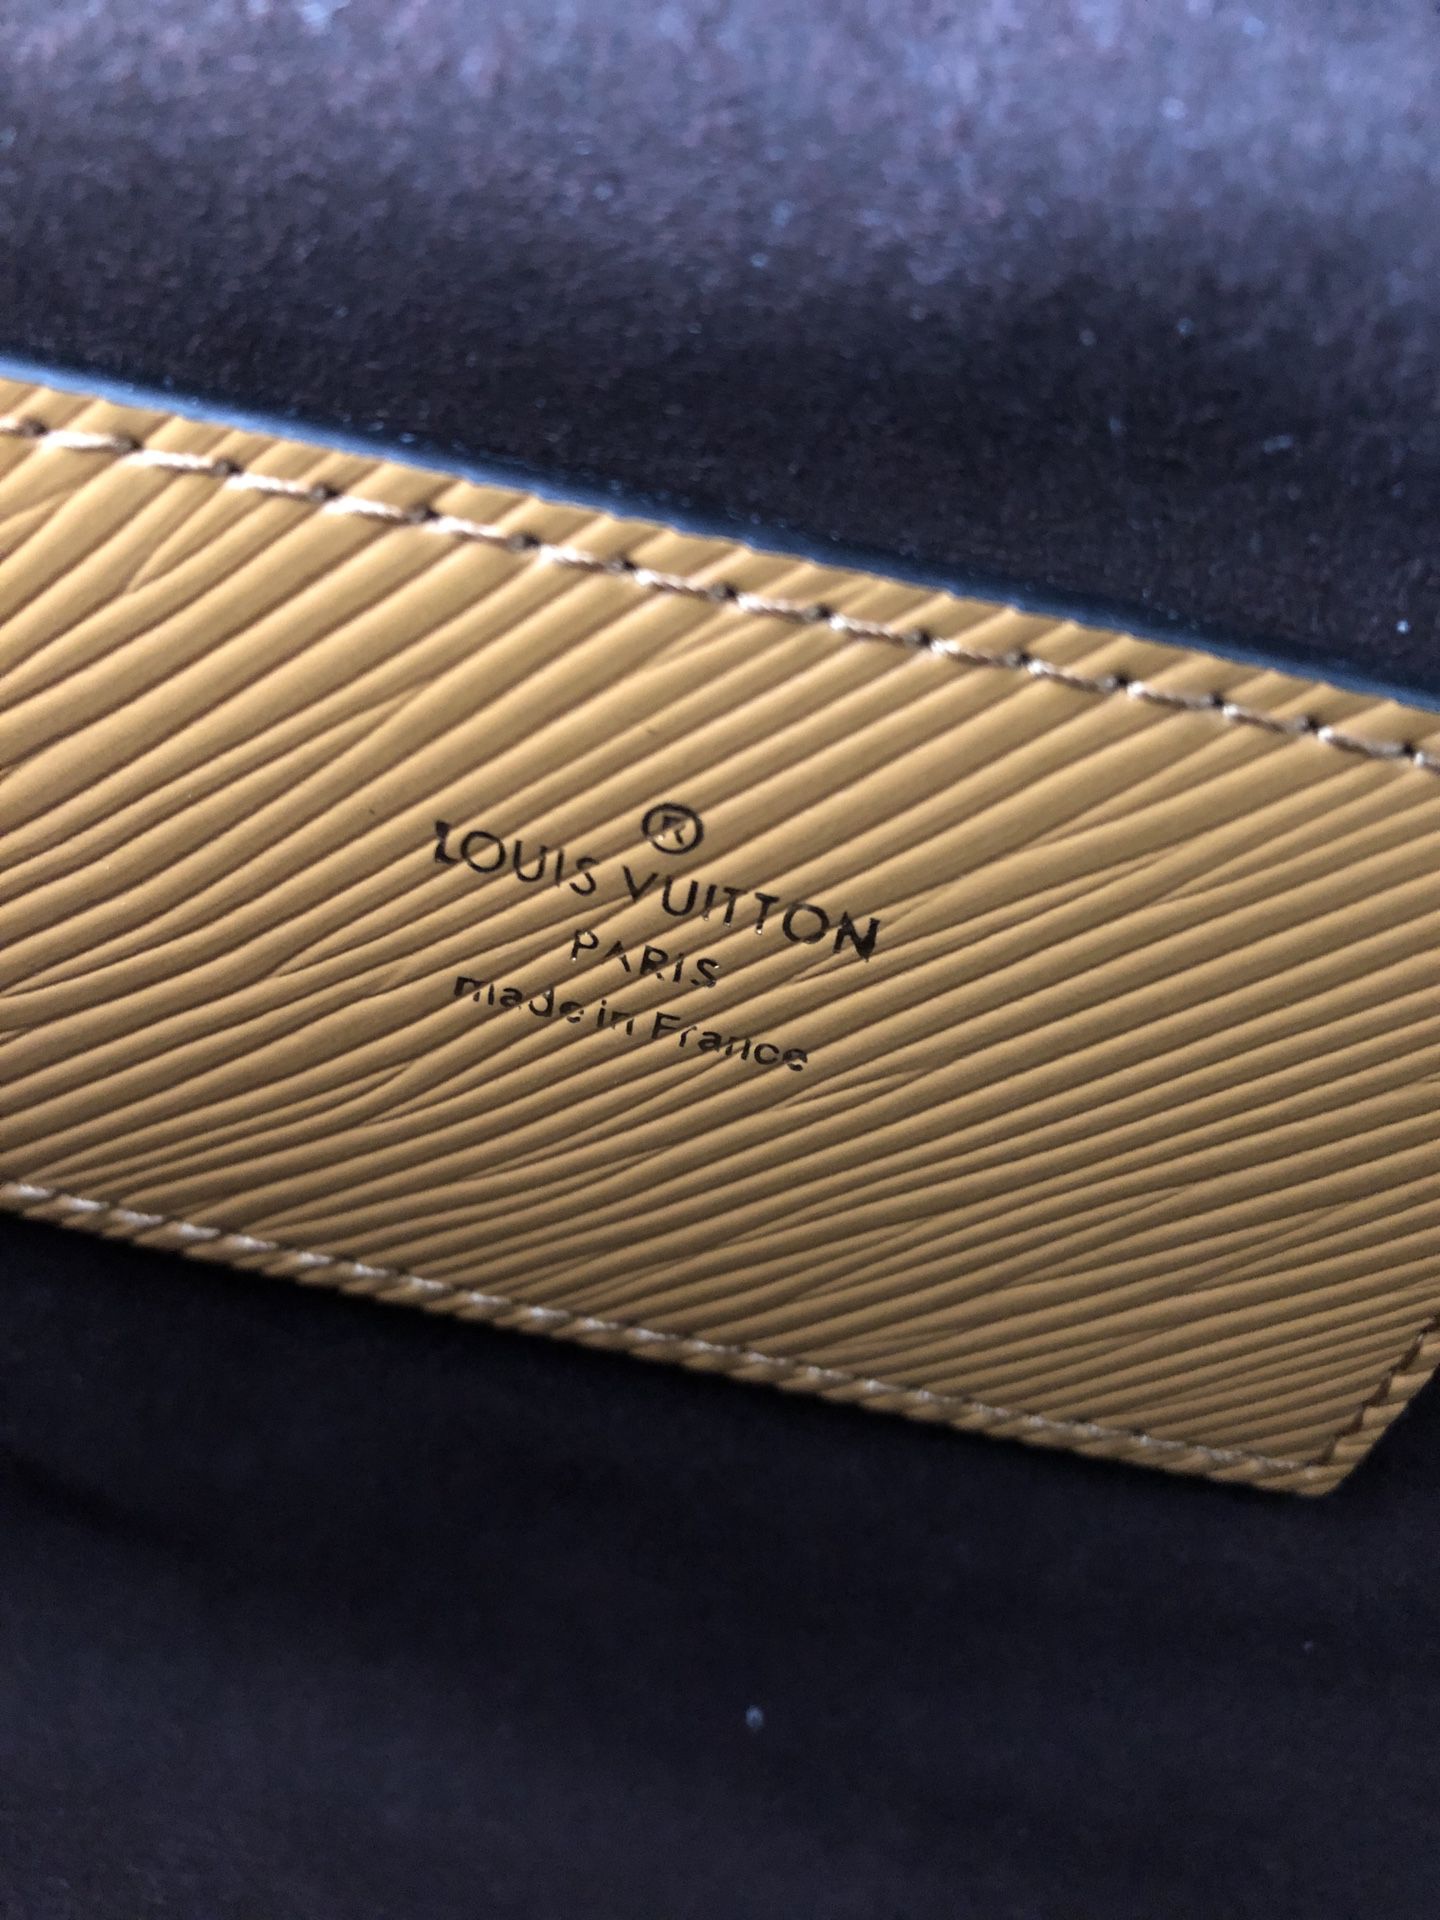 Authentic Louis Vuitton Epi Leather Purse for Sale in Warrington, PA -  OfferUp